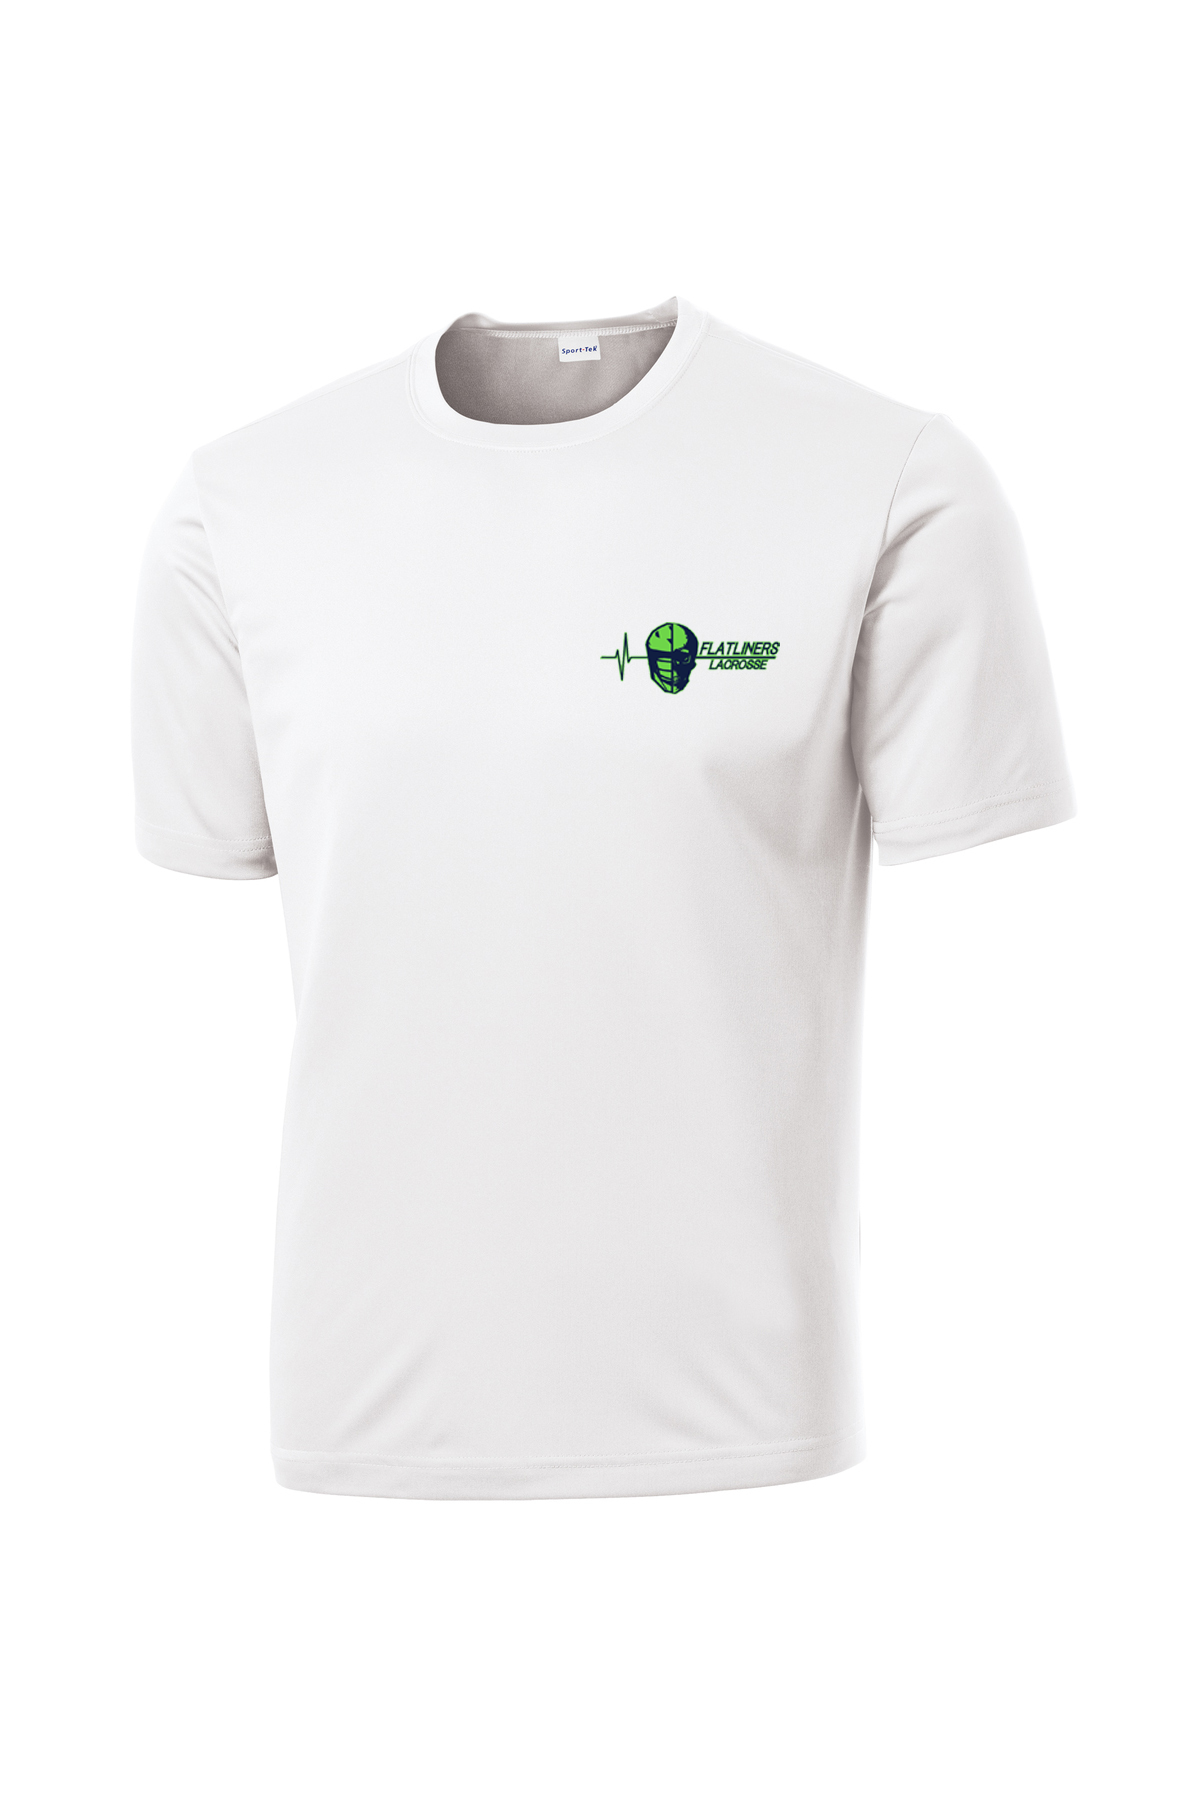 Flatliners Lacrosse White Performance T-Shirt